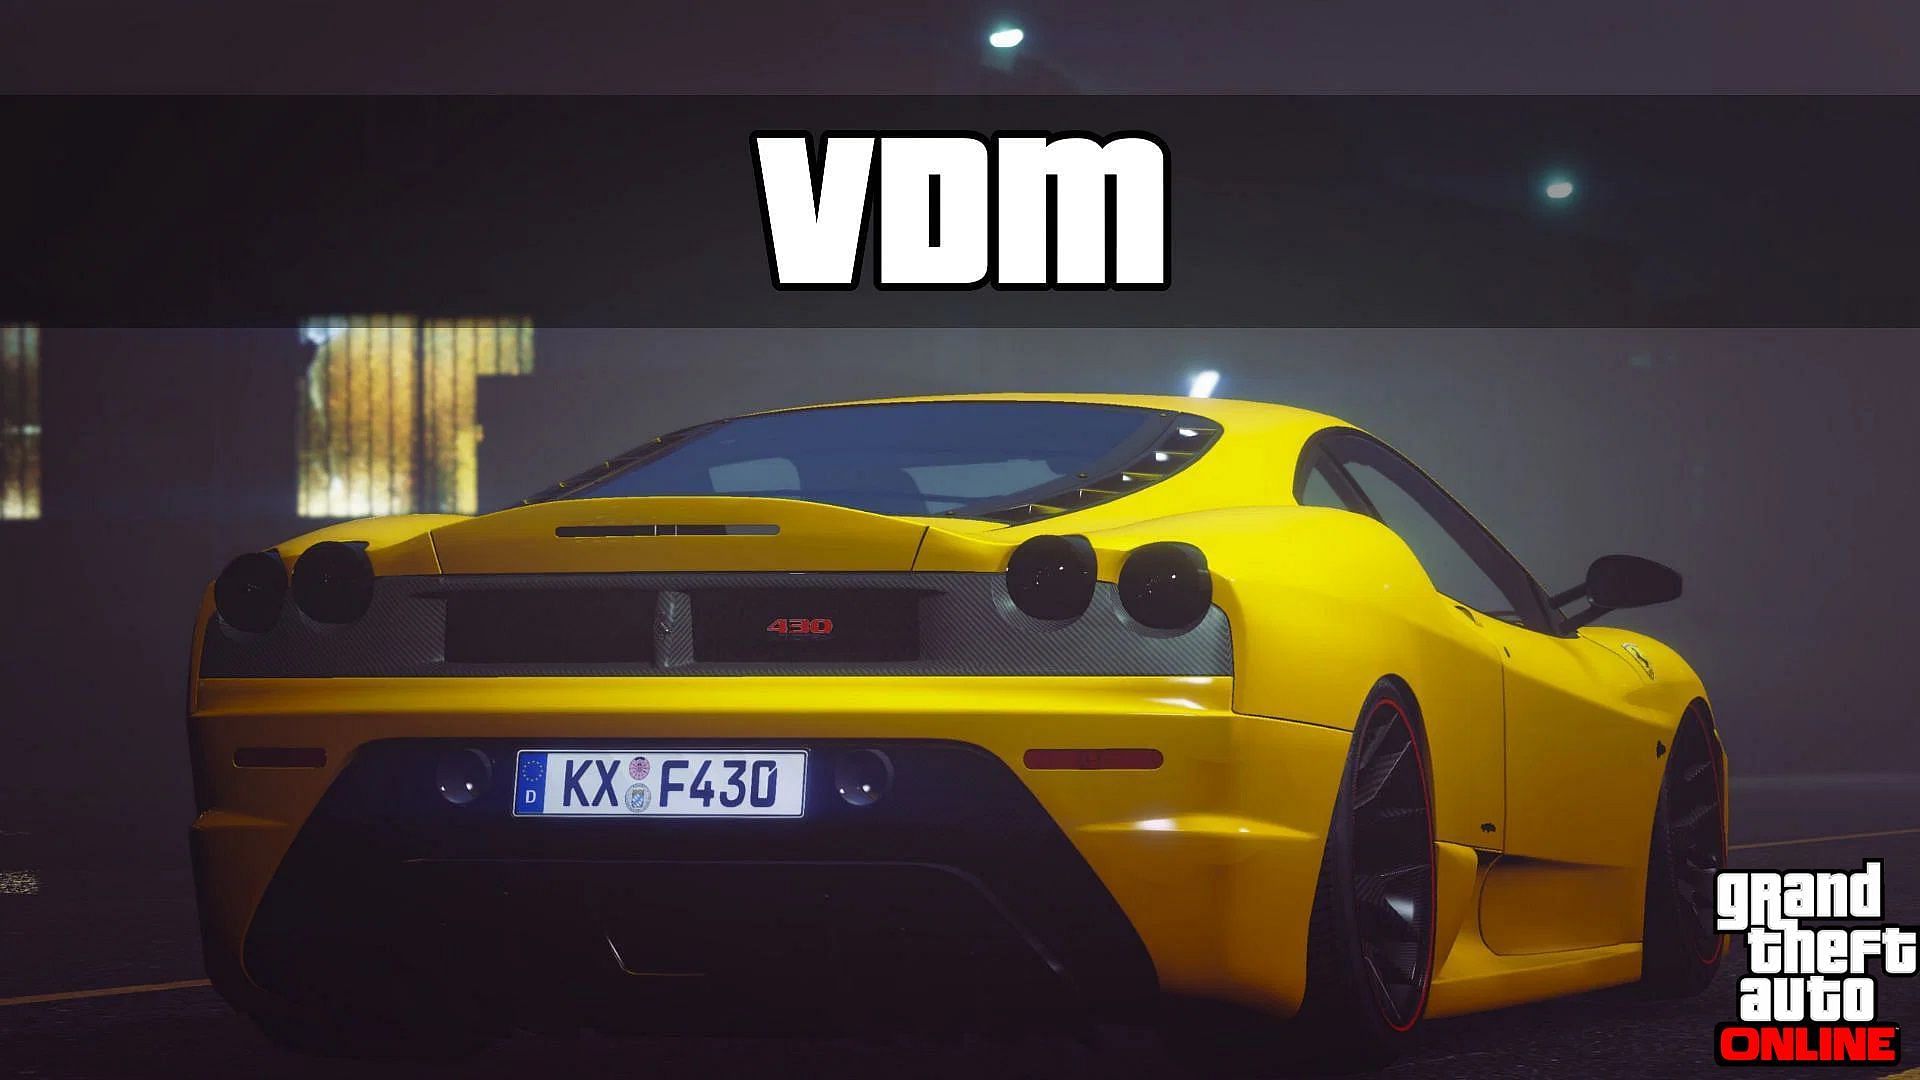 GTA RP uses the VDM abbreviation to imply Vehicle Death Match (Image via Sportskeeda)